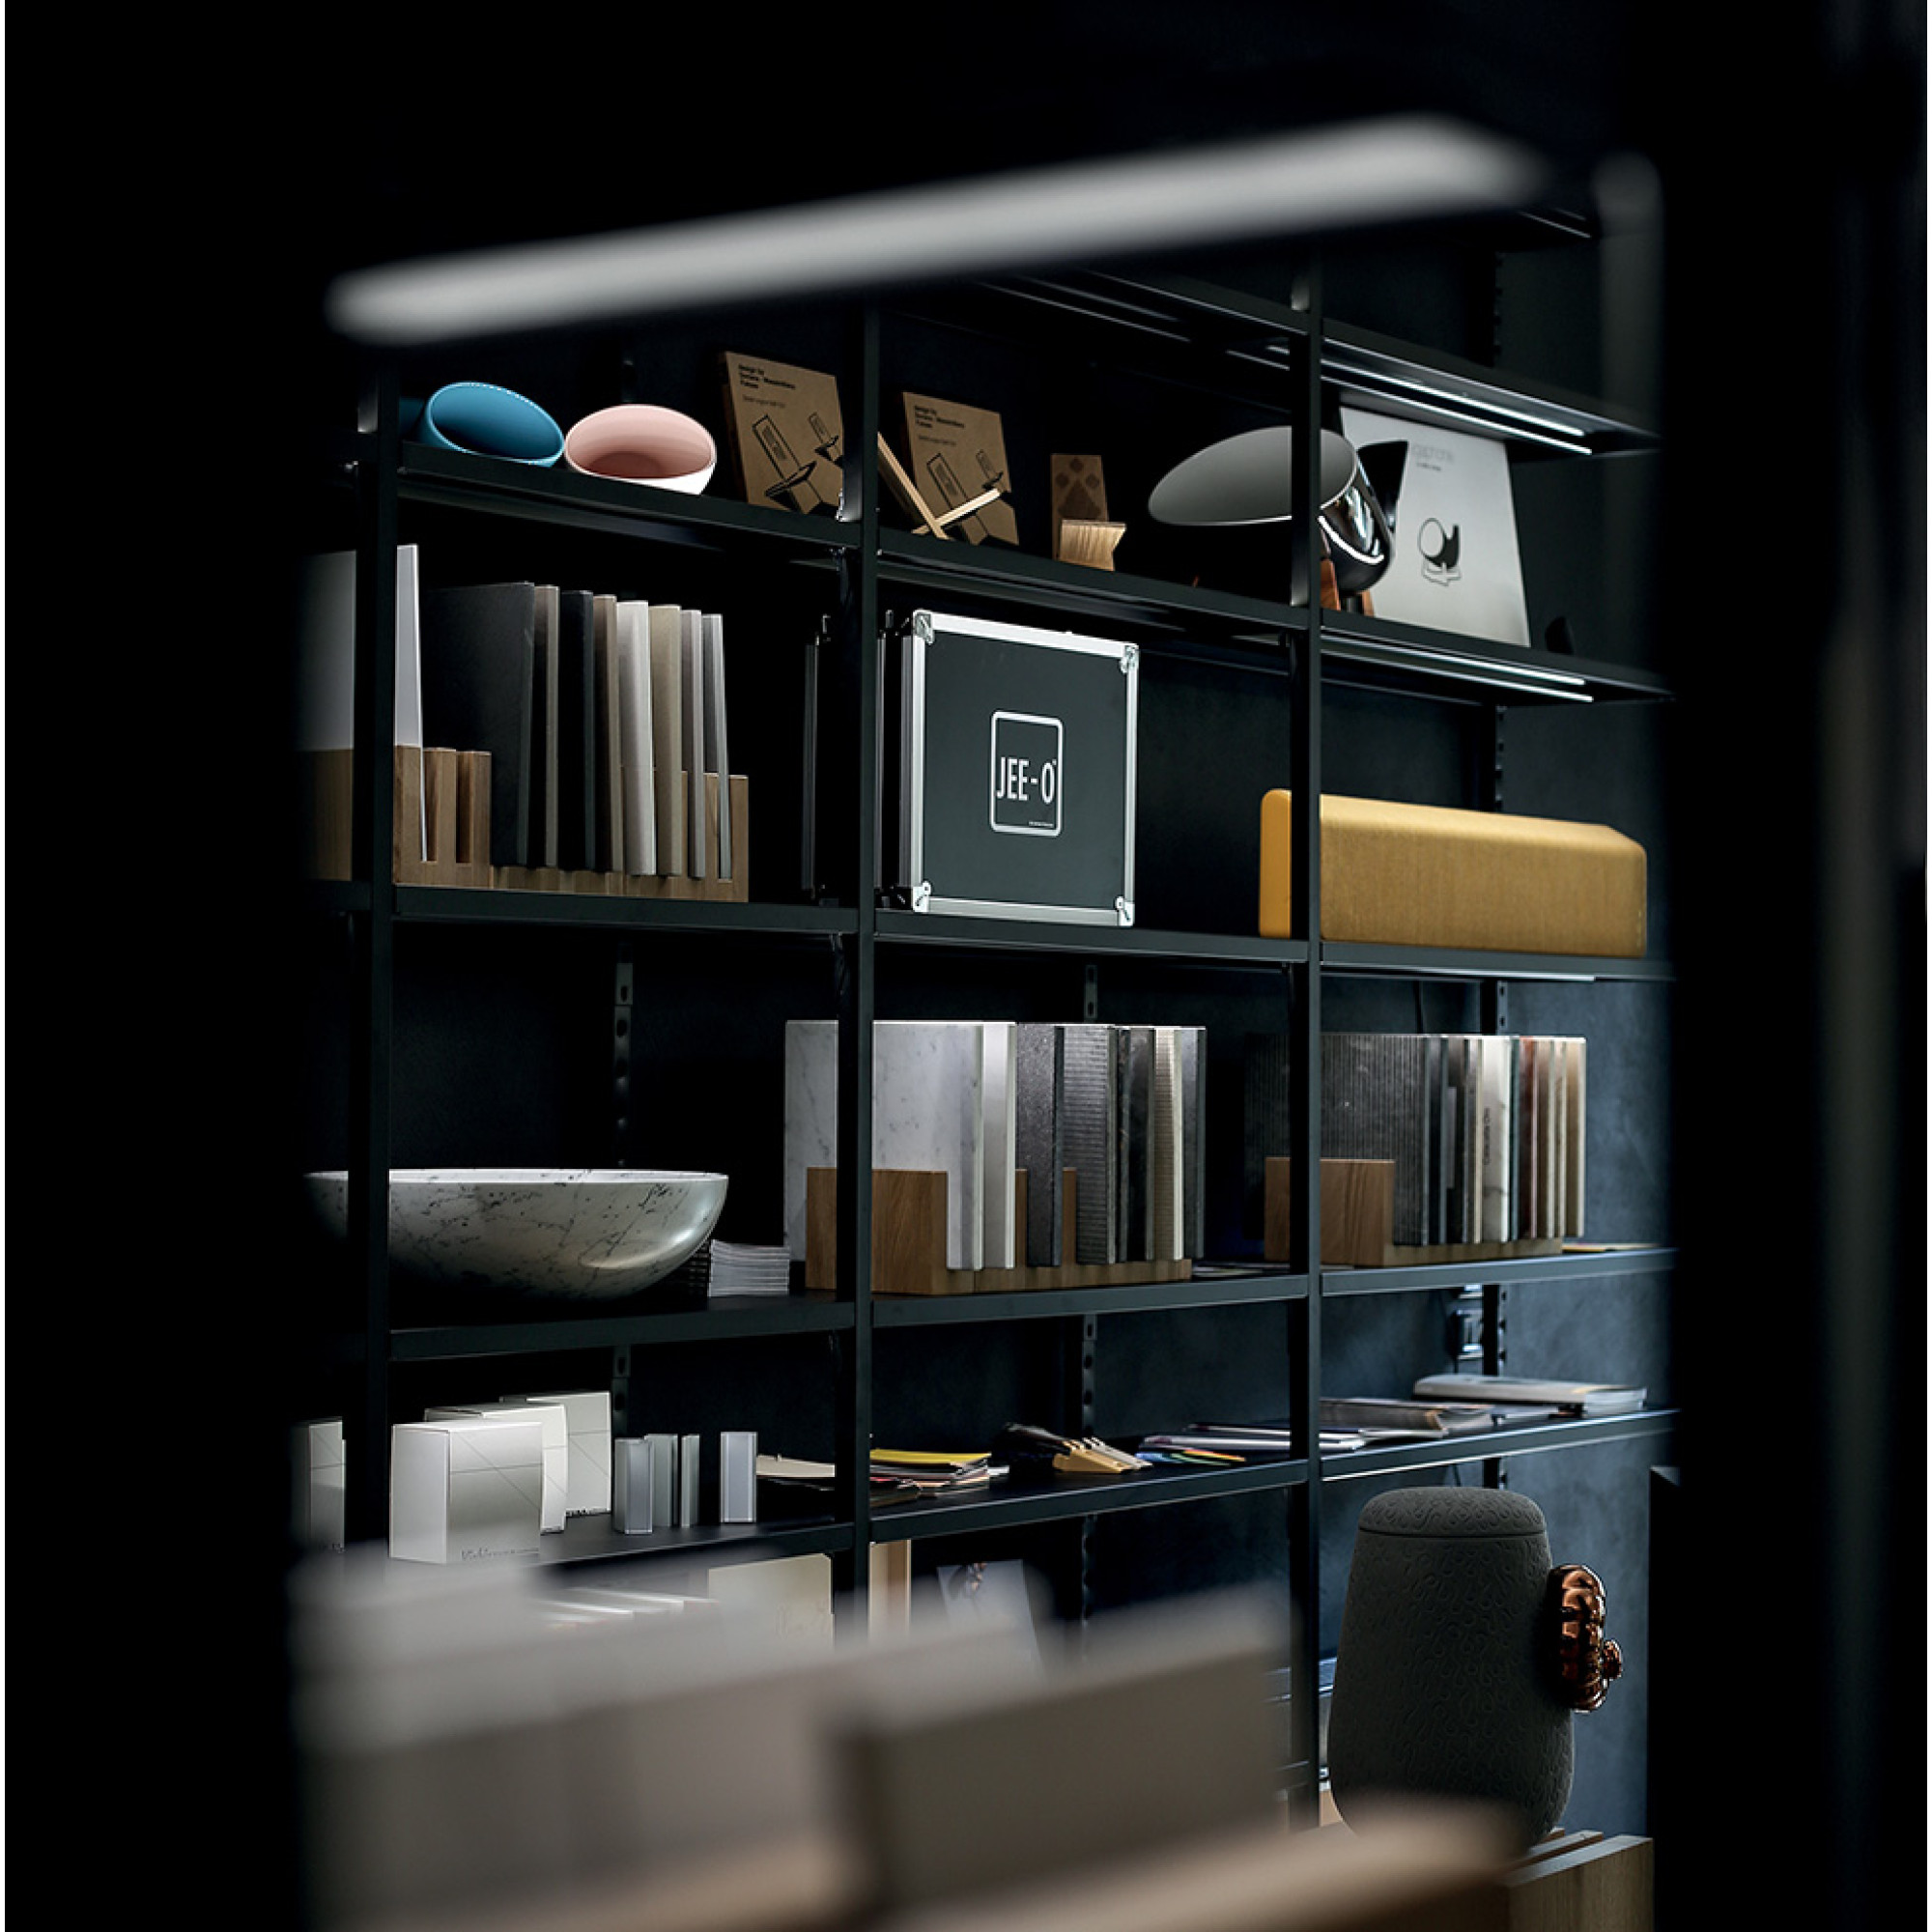 IVAR Corner Shelf 300 - Design and Decorate Your Room in 3D